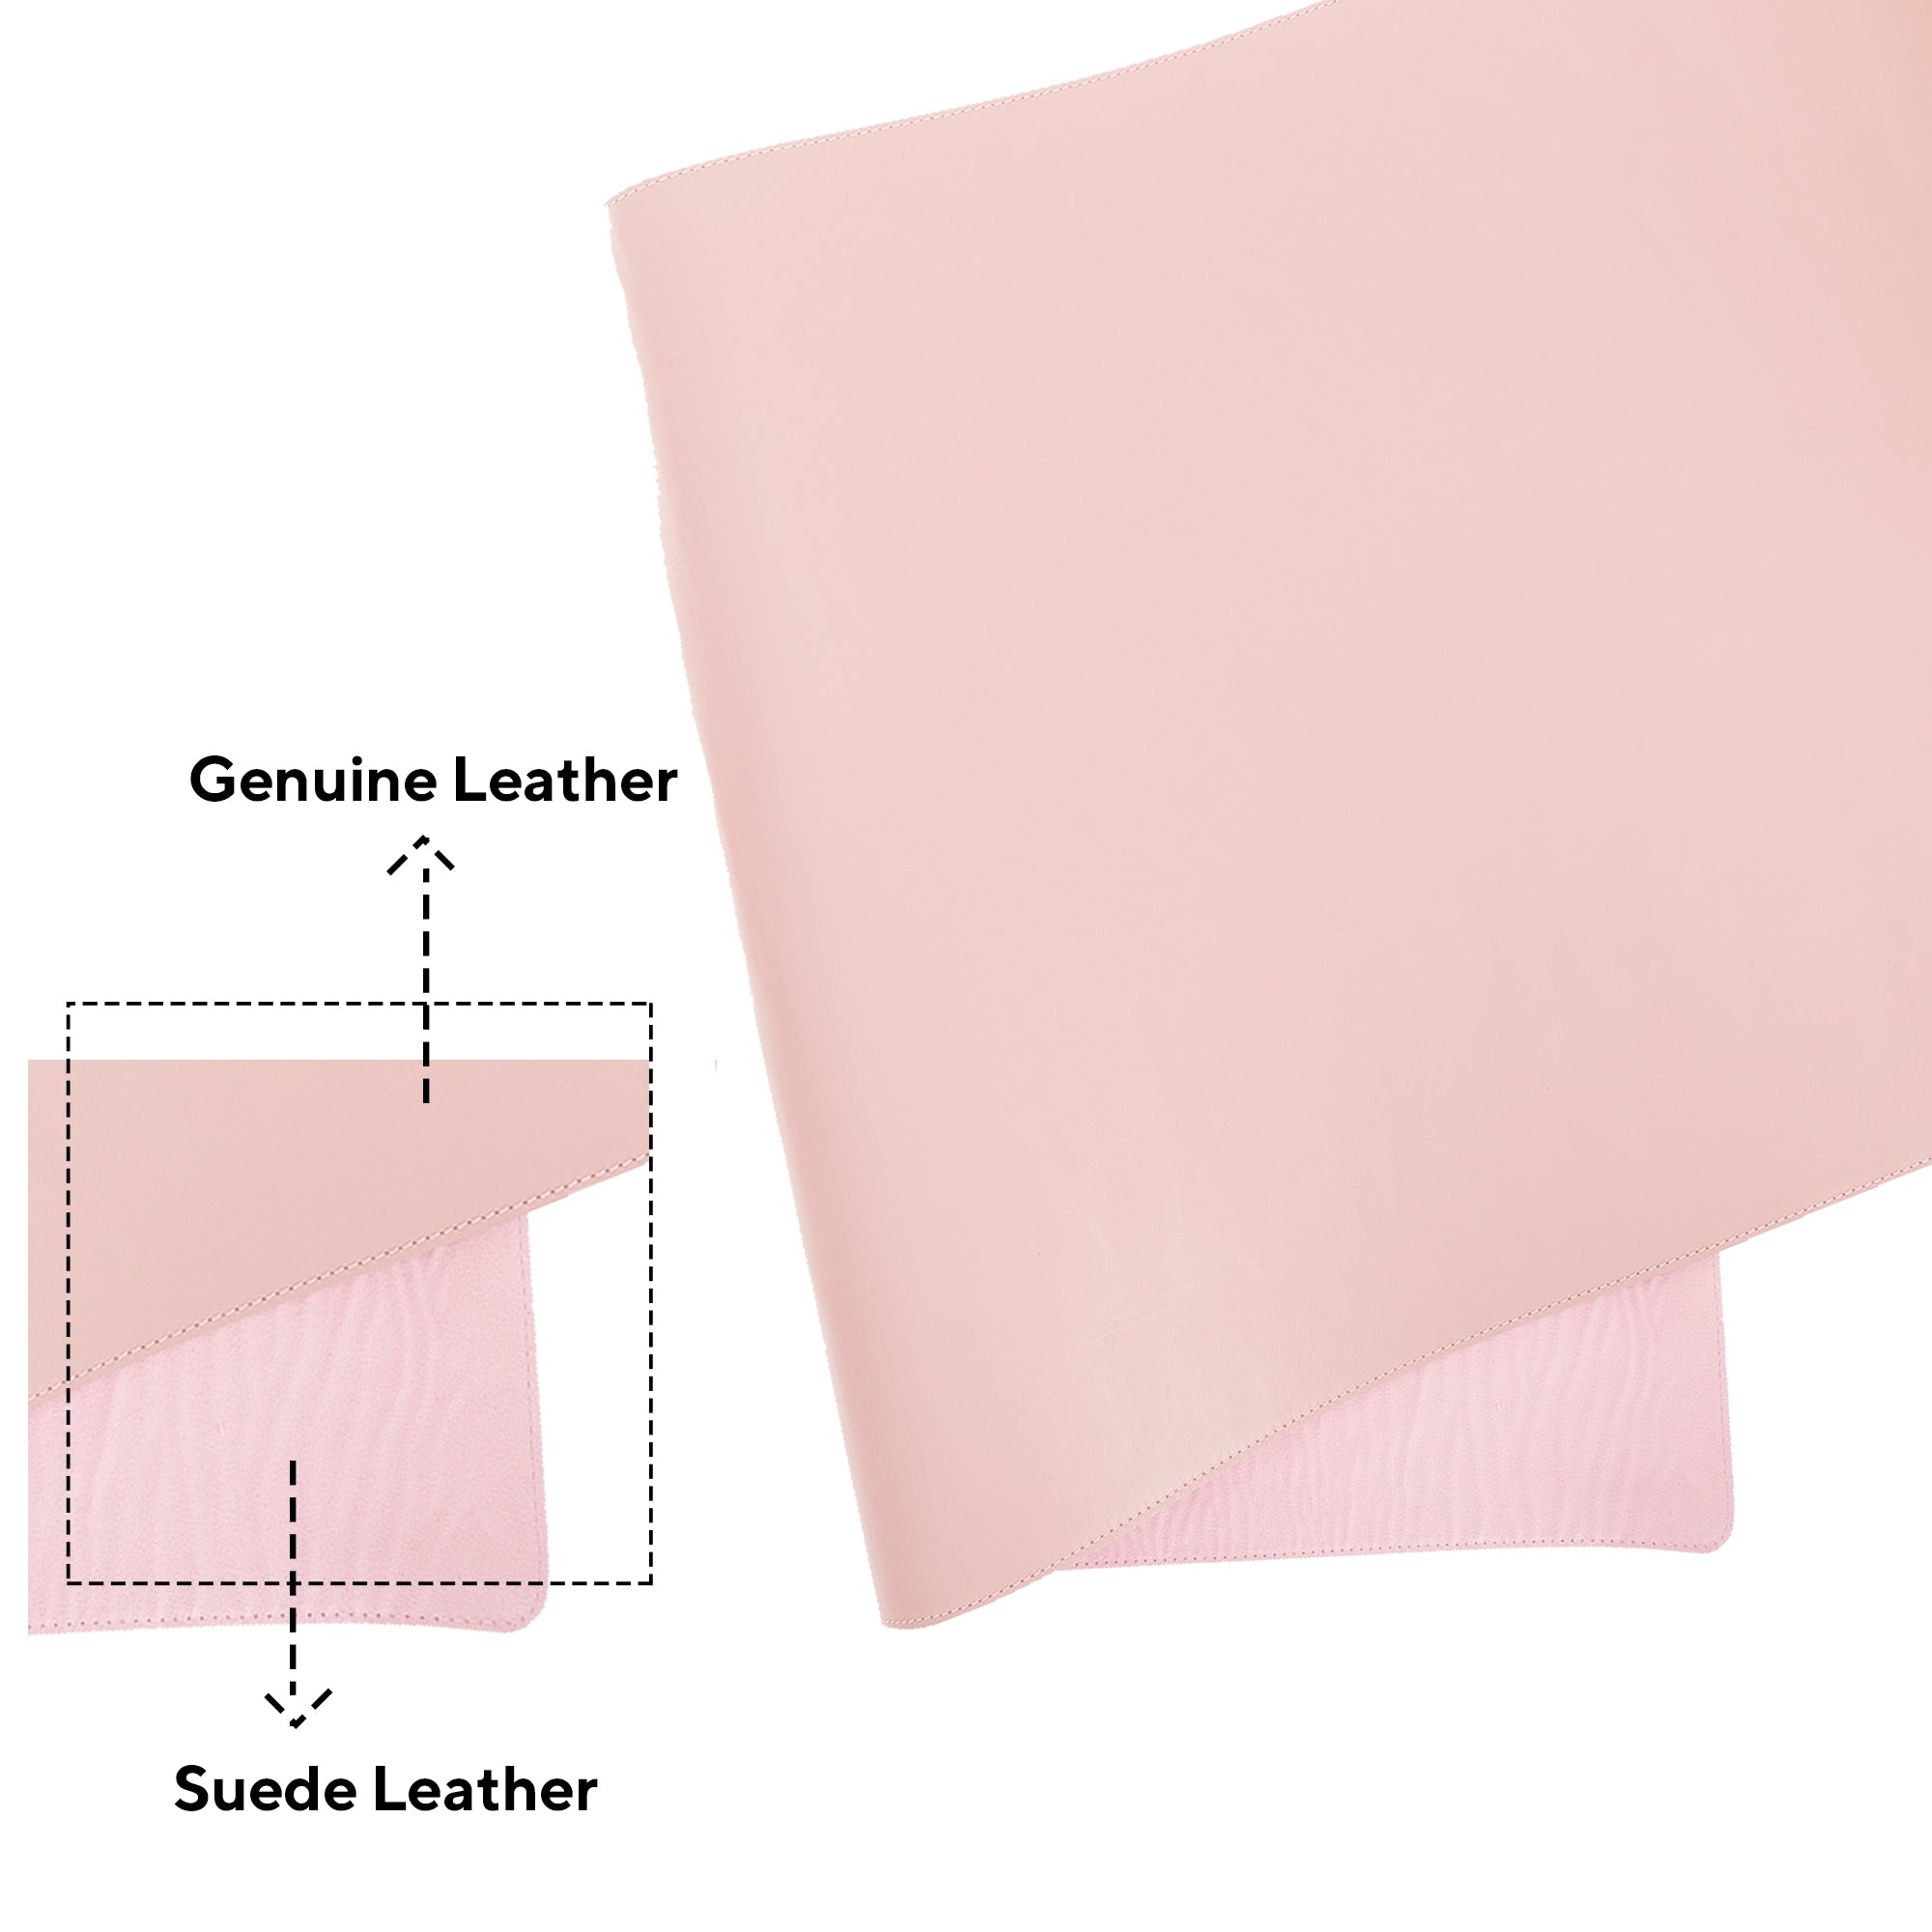 DelfiCase Genuine Leather Deskmat, Computer Pad, Office Desk Pad (Pink Nude) 3